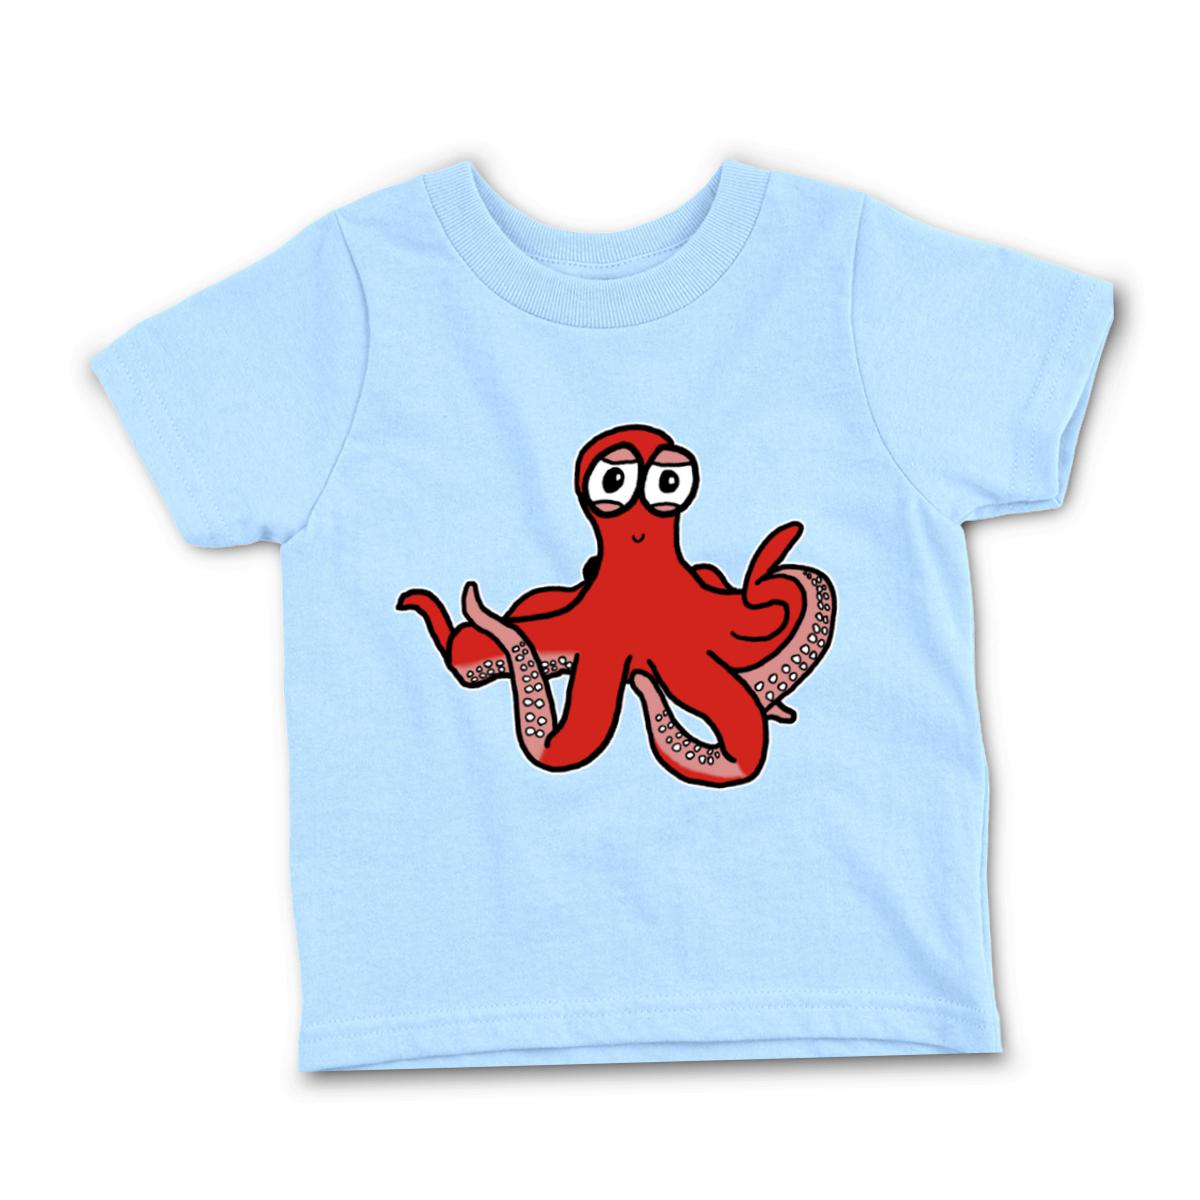 Octopus Infant Tee 12M light-blue